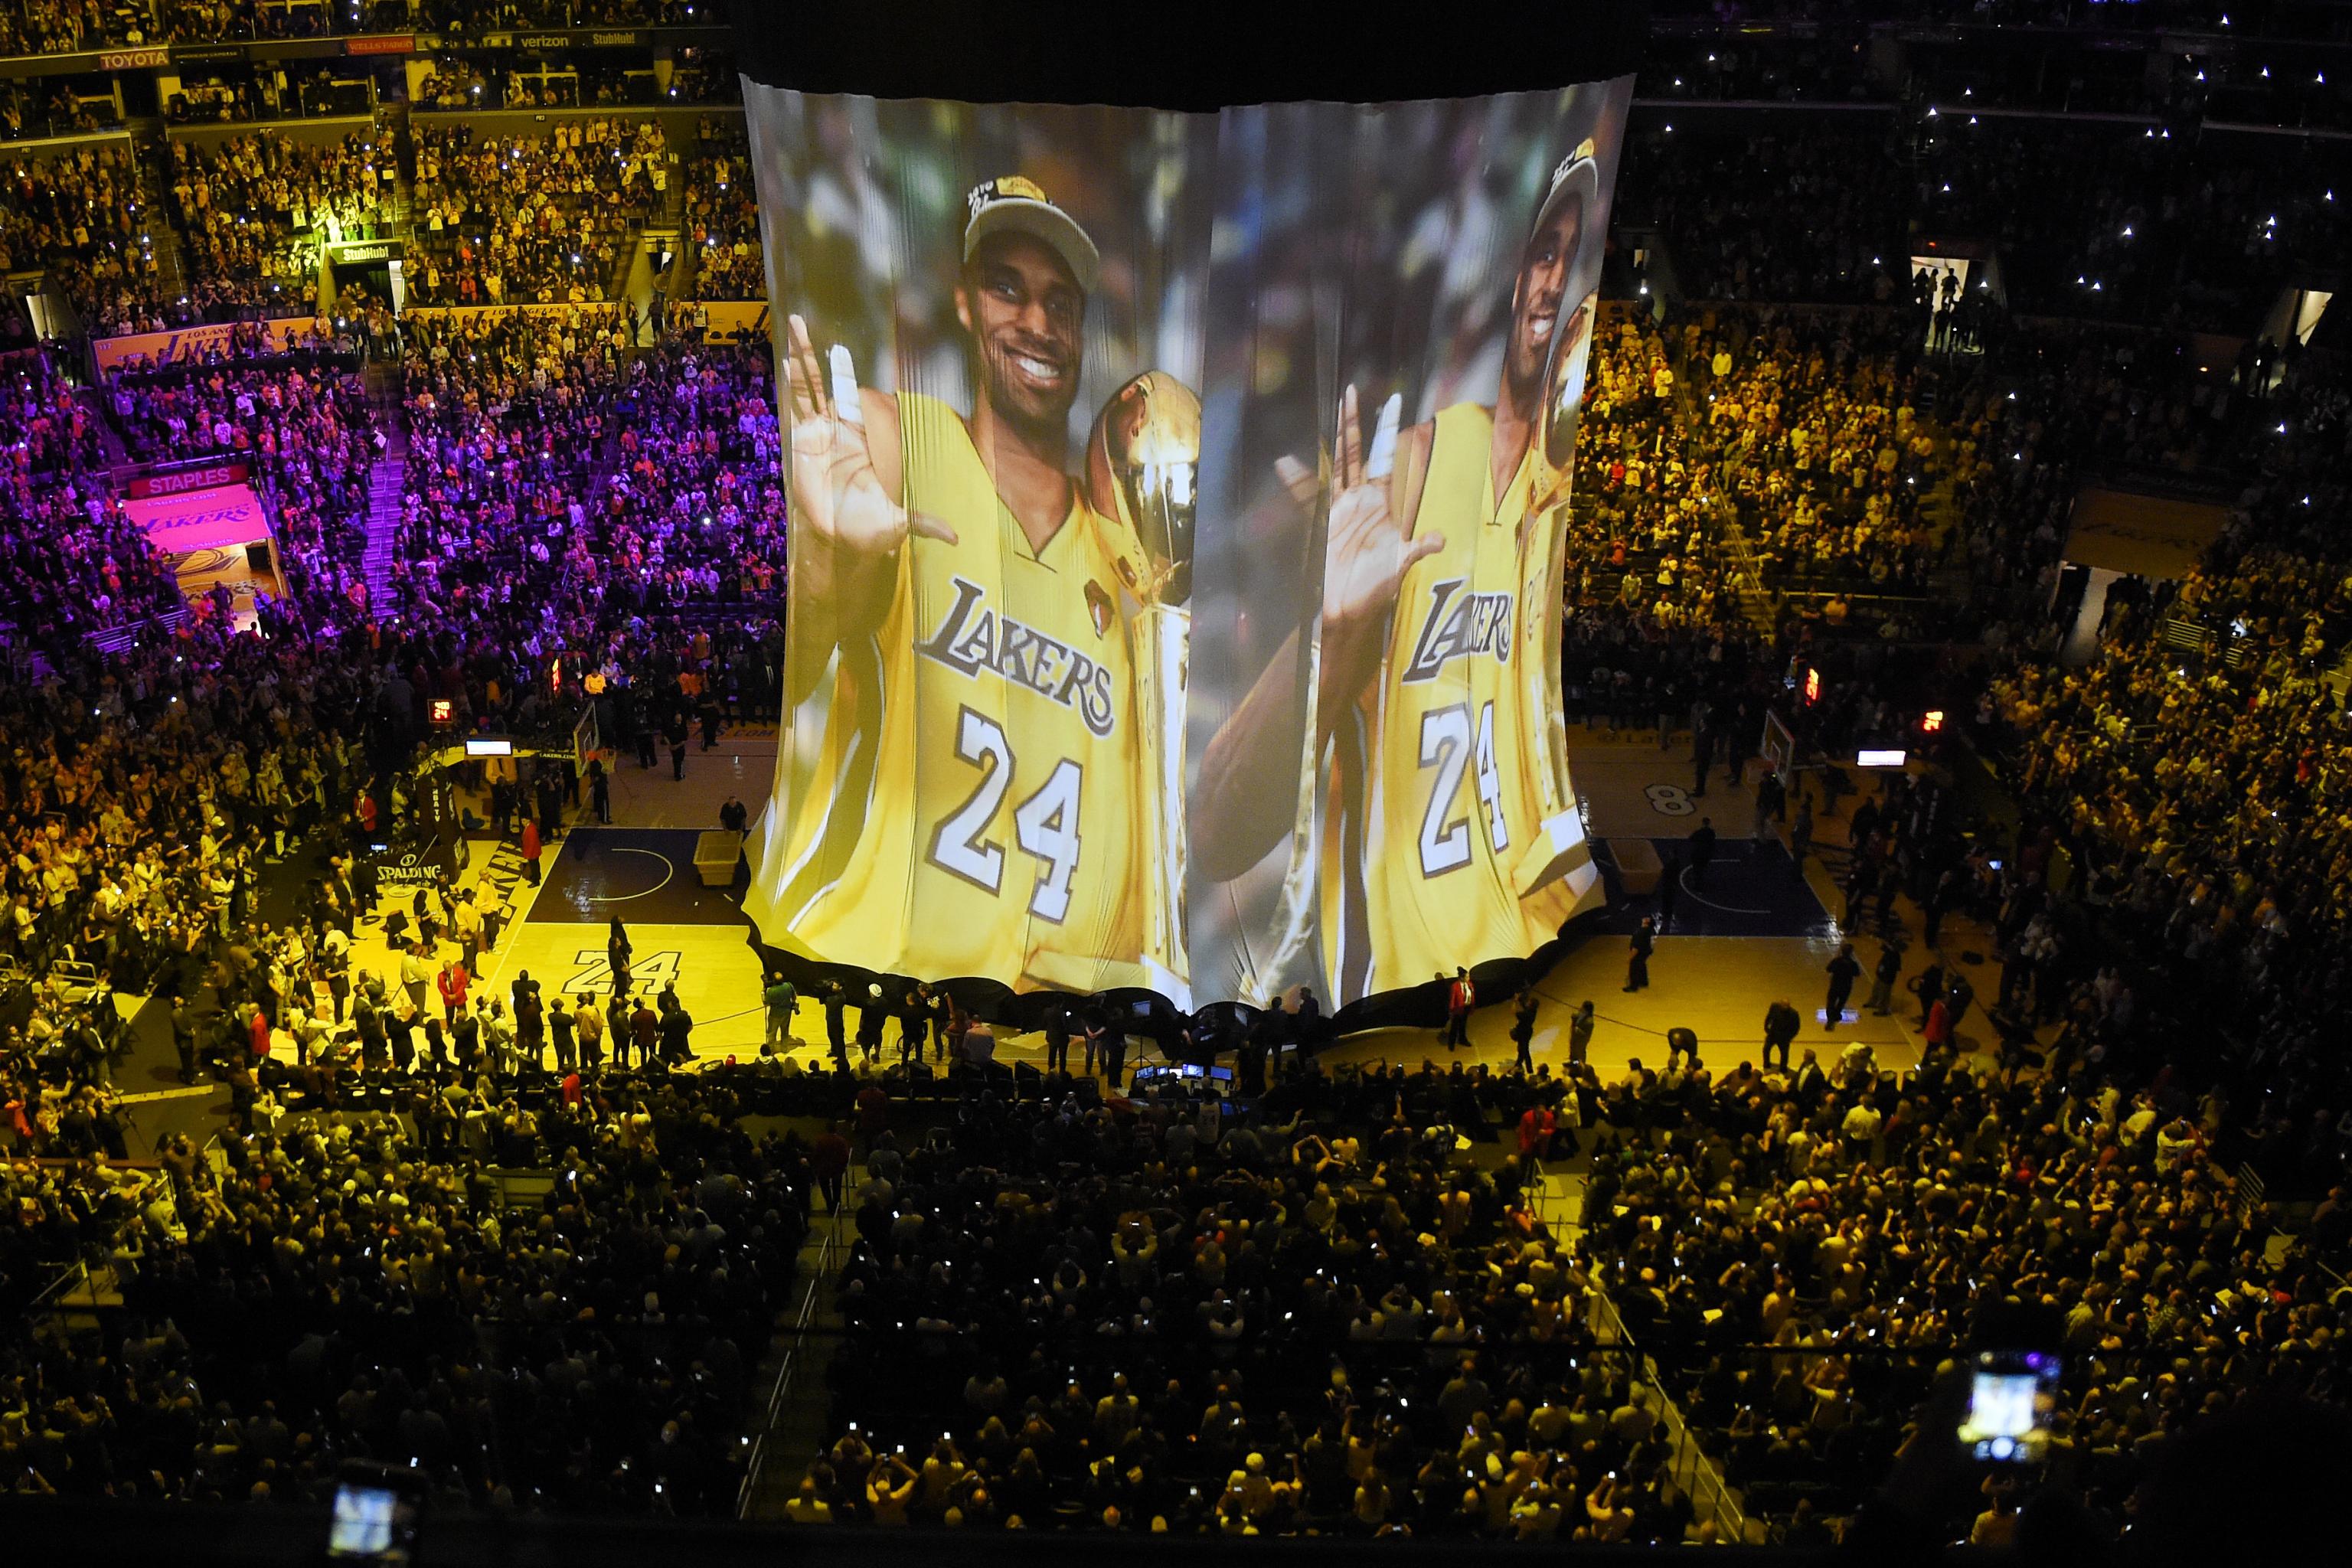 Lakers News: Lou Williams Recalls How Kobe Bryant Shut Down